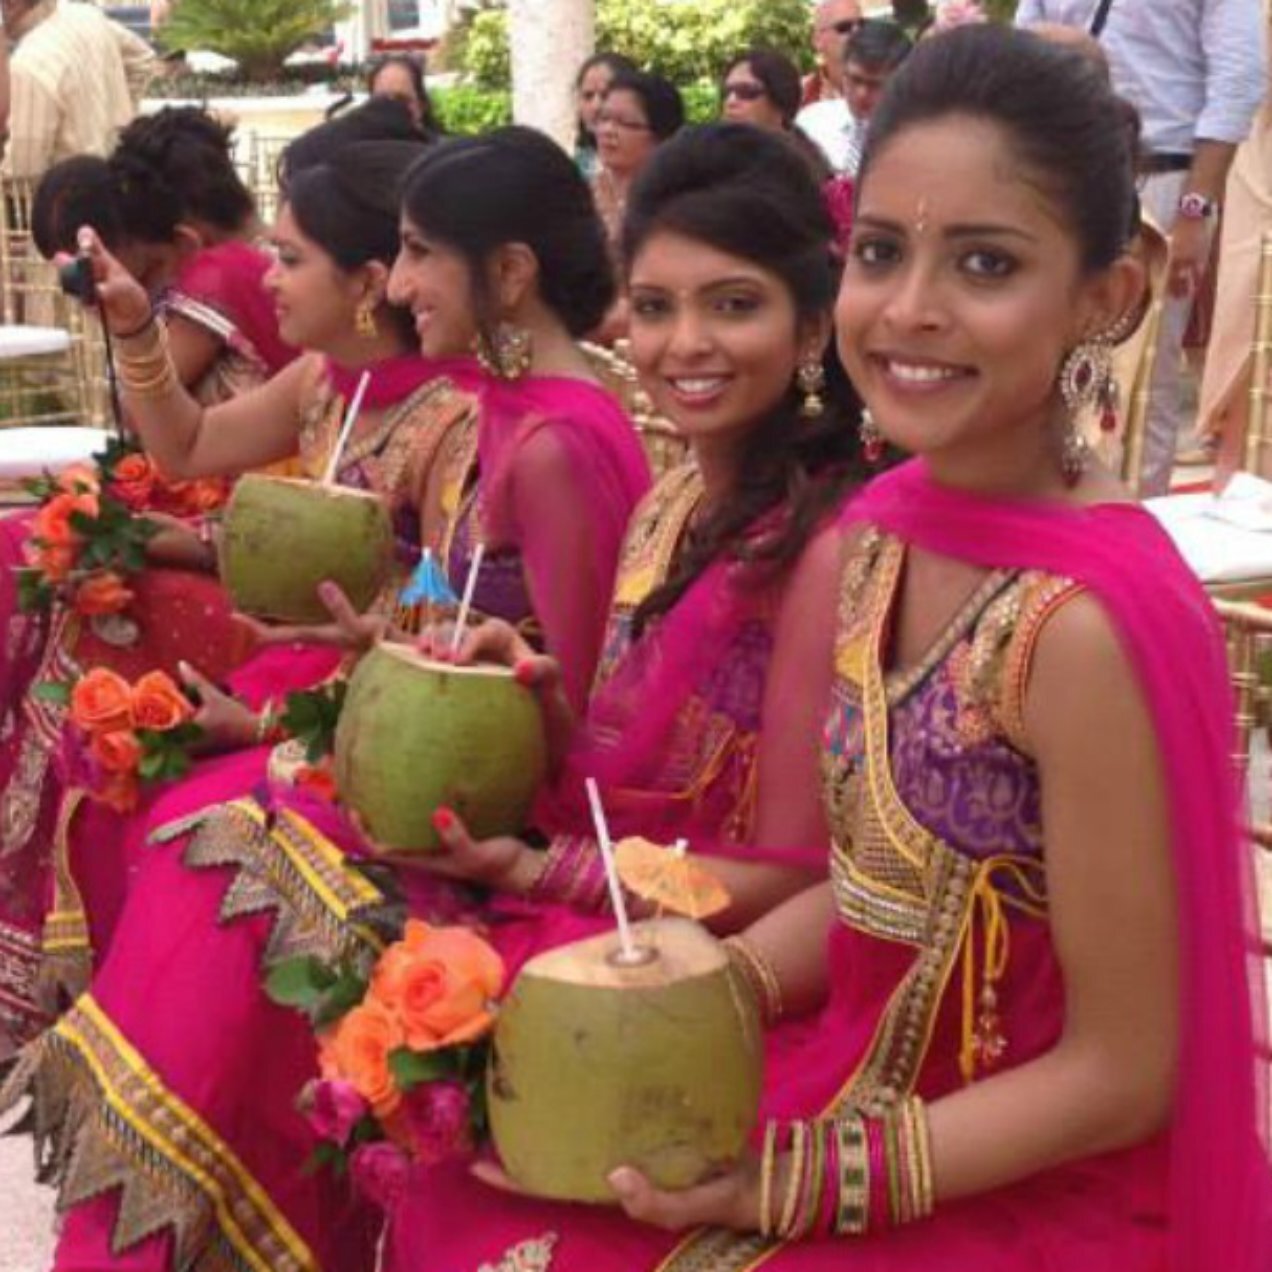 Hindu Wedding on Cancun’s White Sand Beaches